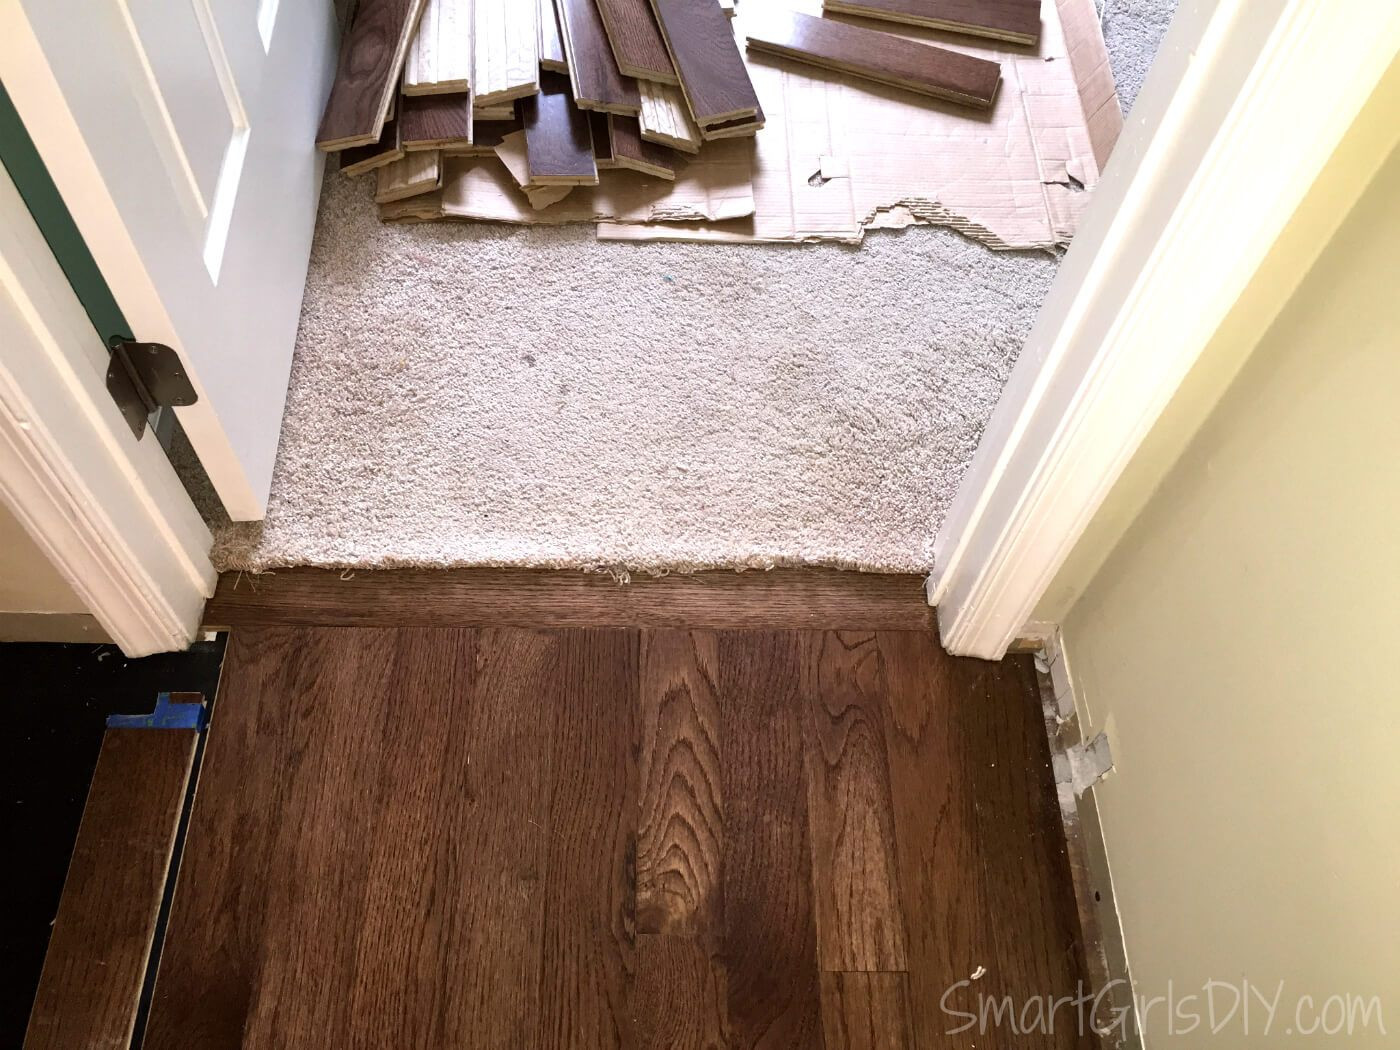 hardwood floor meets carpeted stairs of upstairs hallway 1 installing hardwood floors with transition between carpet and hardwood floor